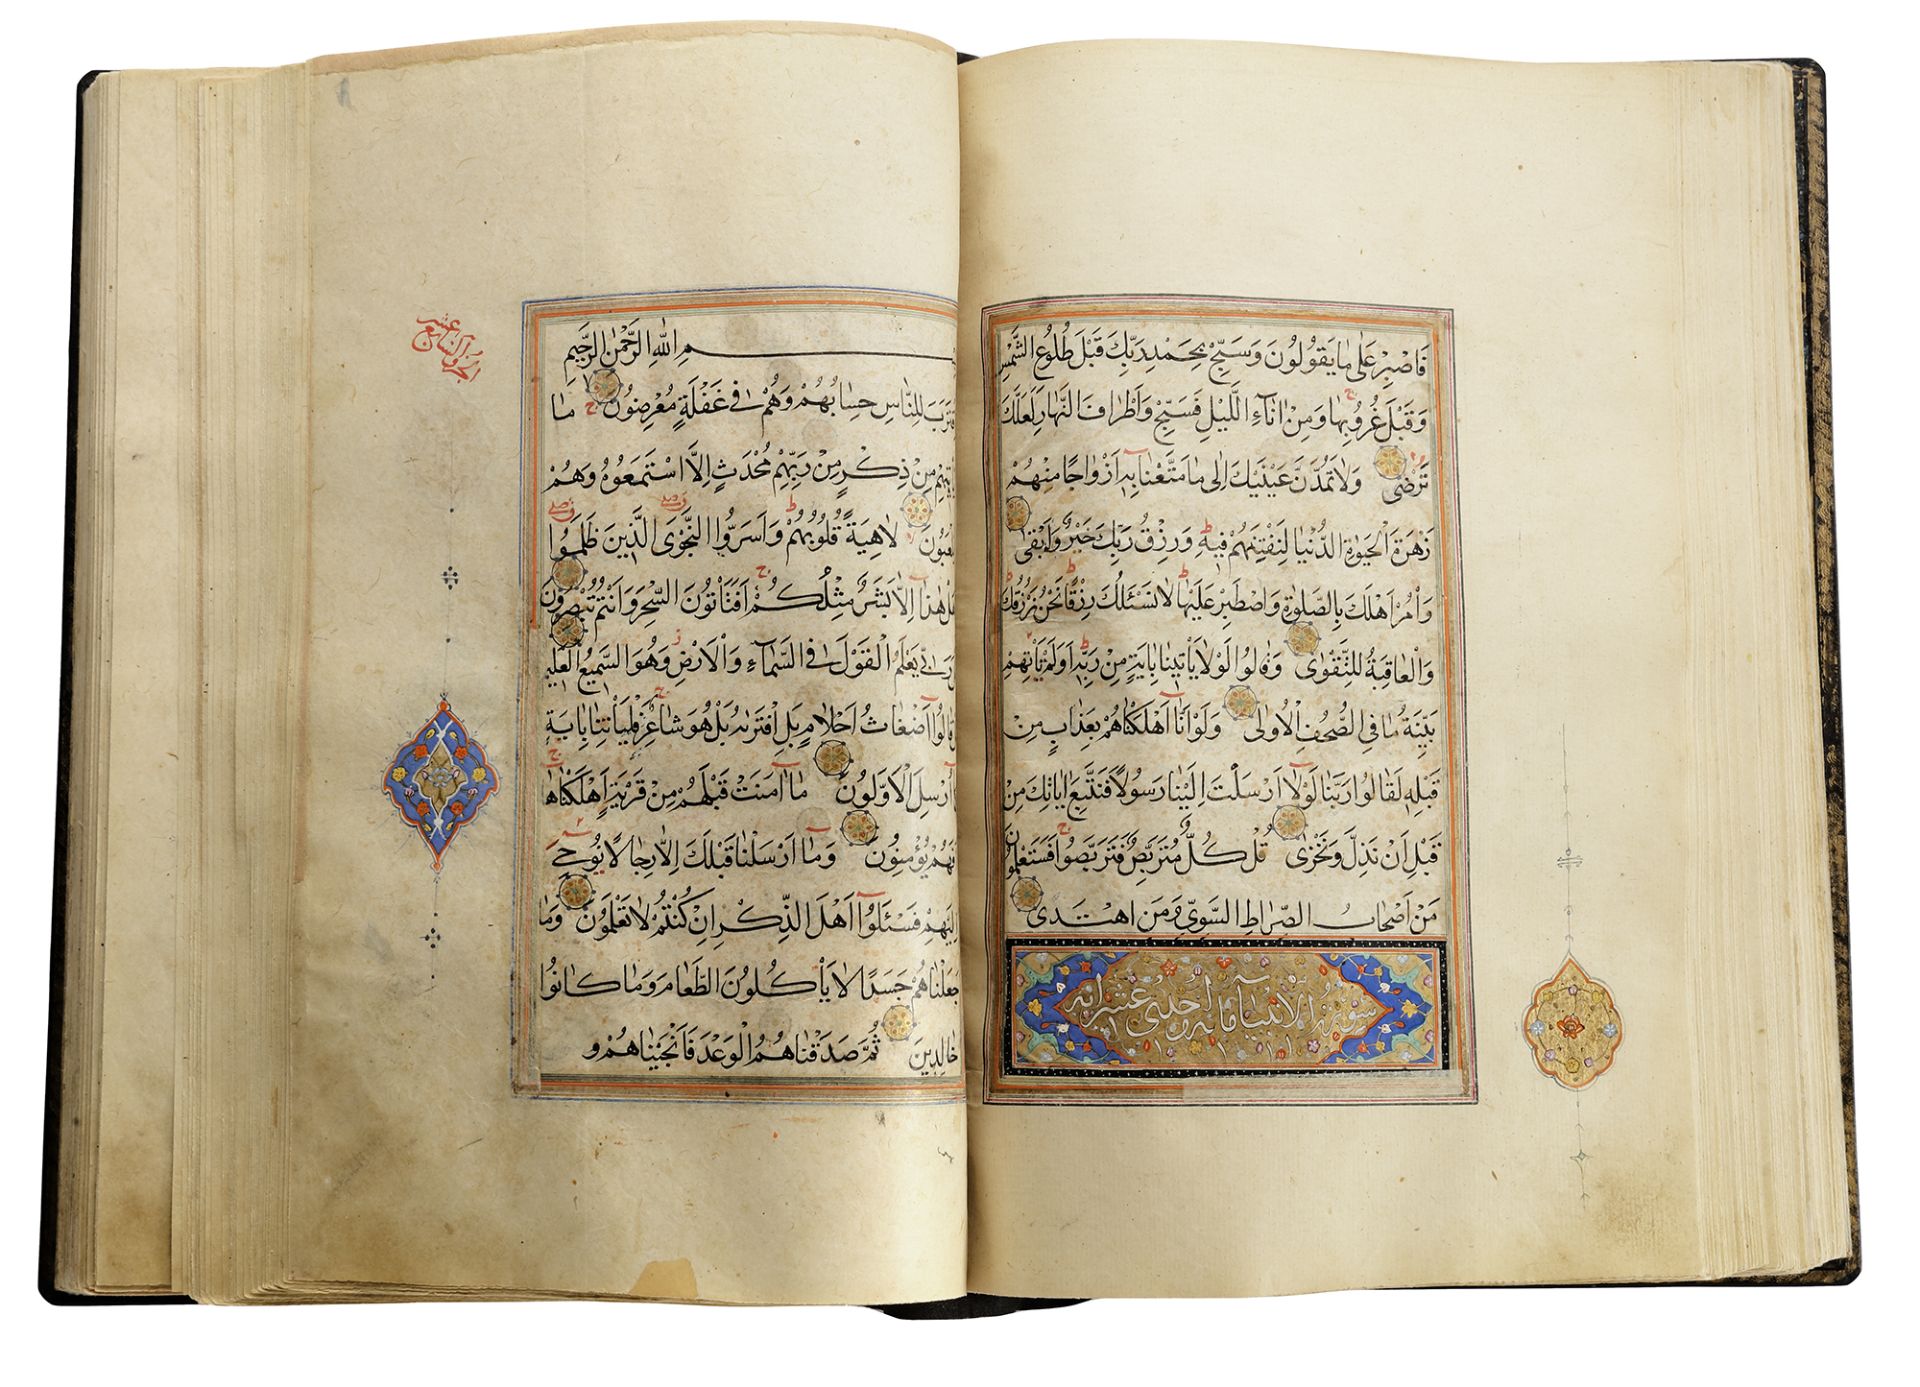 A LARGE ILLUMINATED QURAN, COPIED BY ABDULLAH AL-HUSAYNI, PERSIA, SAFAVID, SHIRAZ, 16TH CENTURY - Image 21 of 21